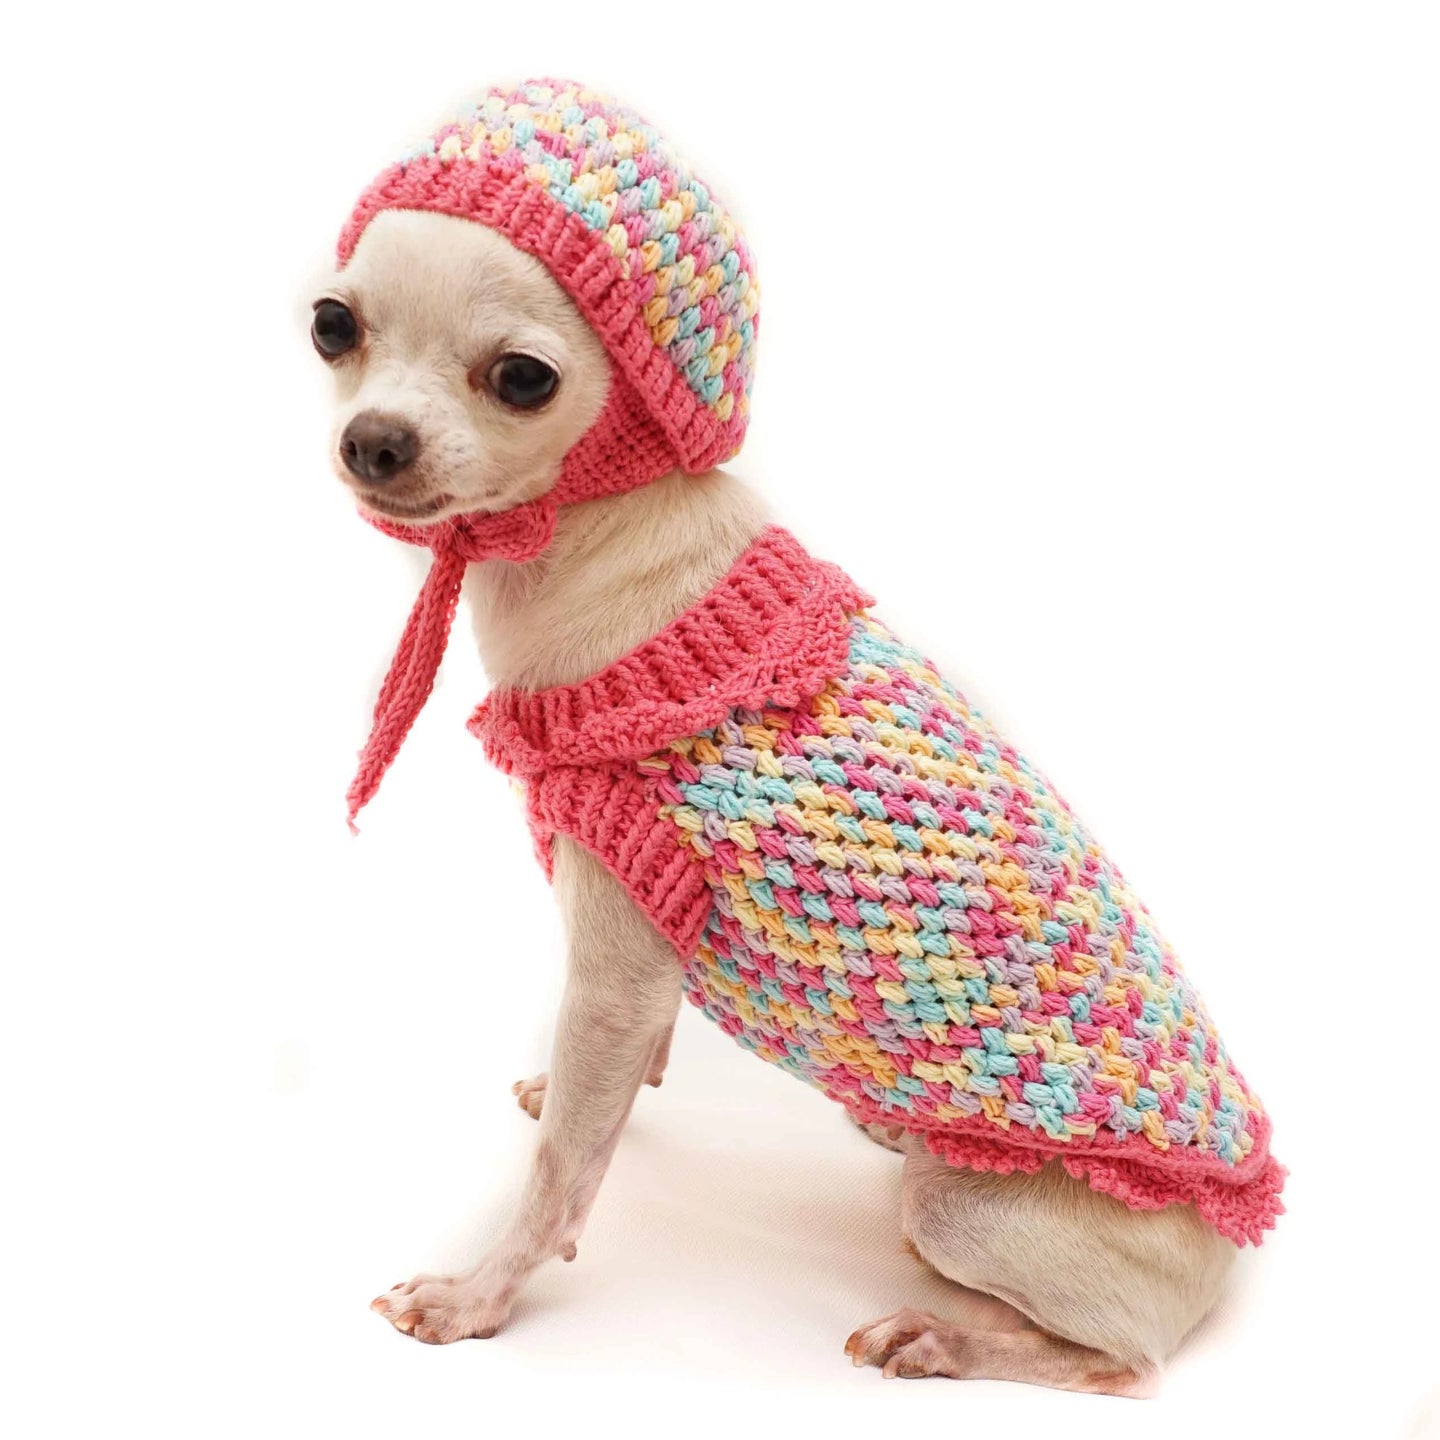 Cotton Candy Crochet 2 Piece Outfit